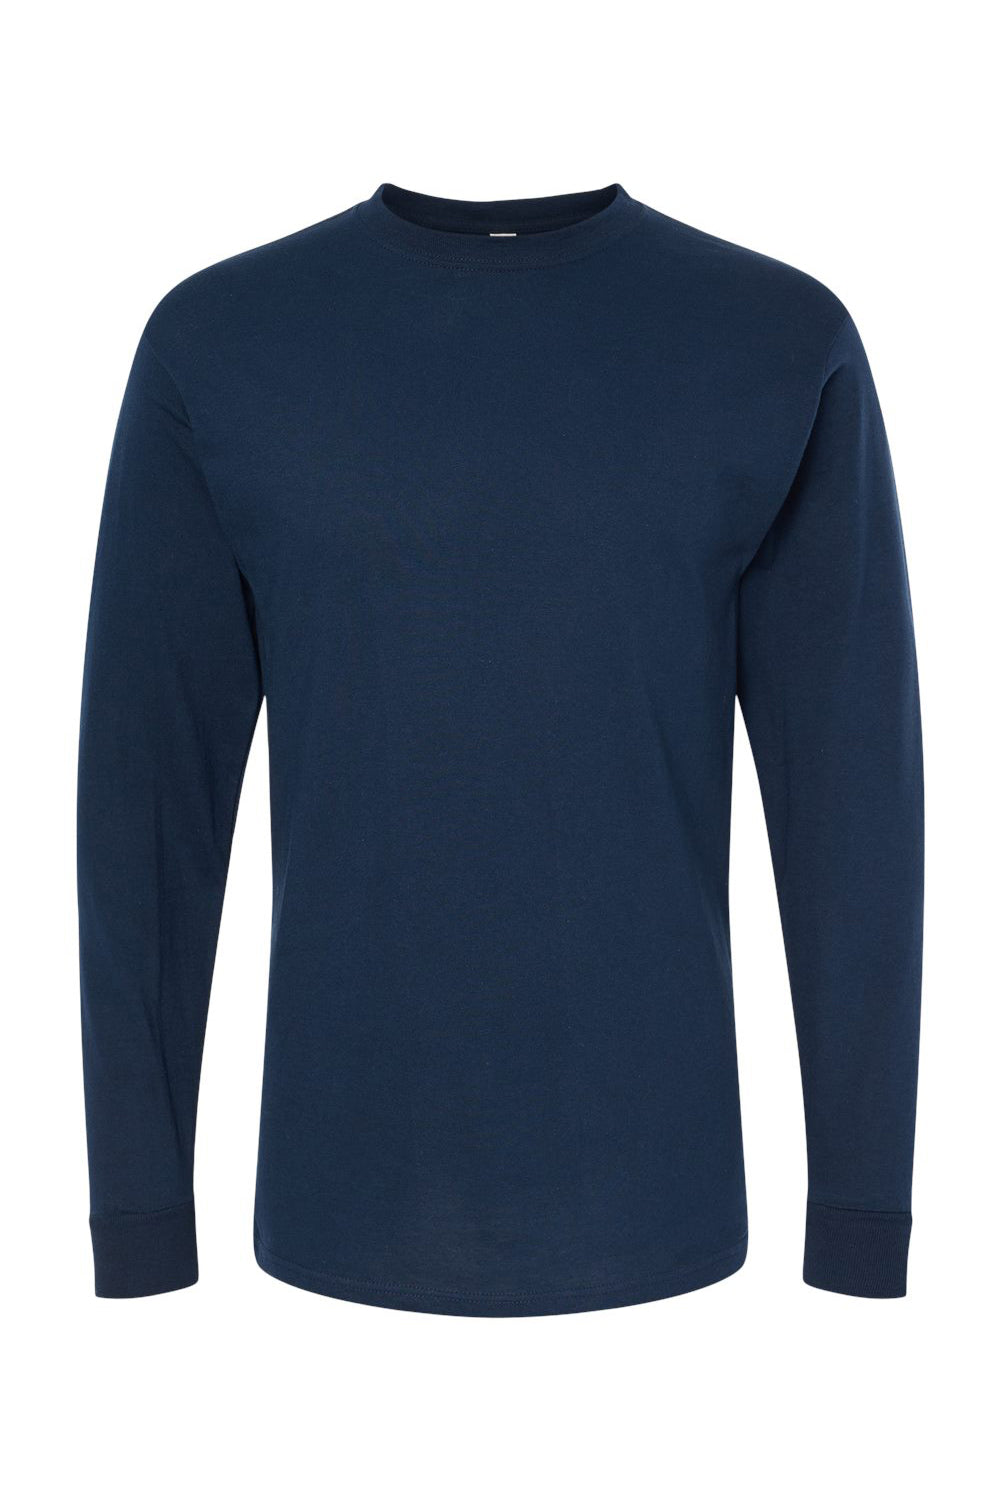 M&O 4820 Mens Gold Soft Touch Long Sleeve Crewneck T-Shirt Deep Navy Blue Flat Front